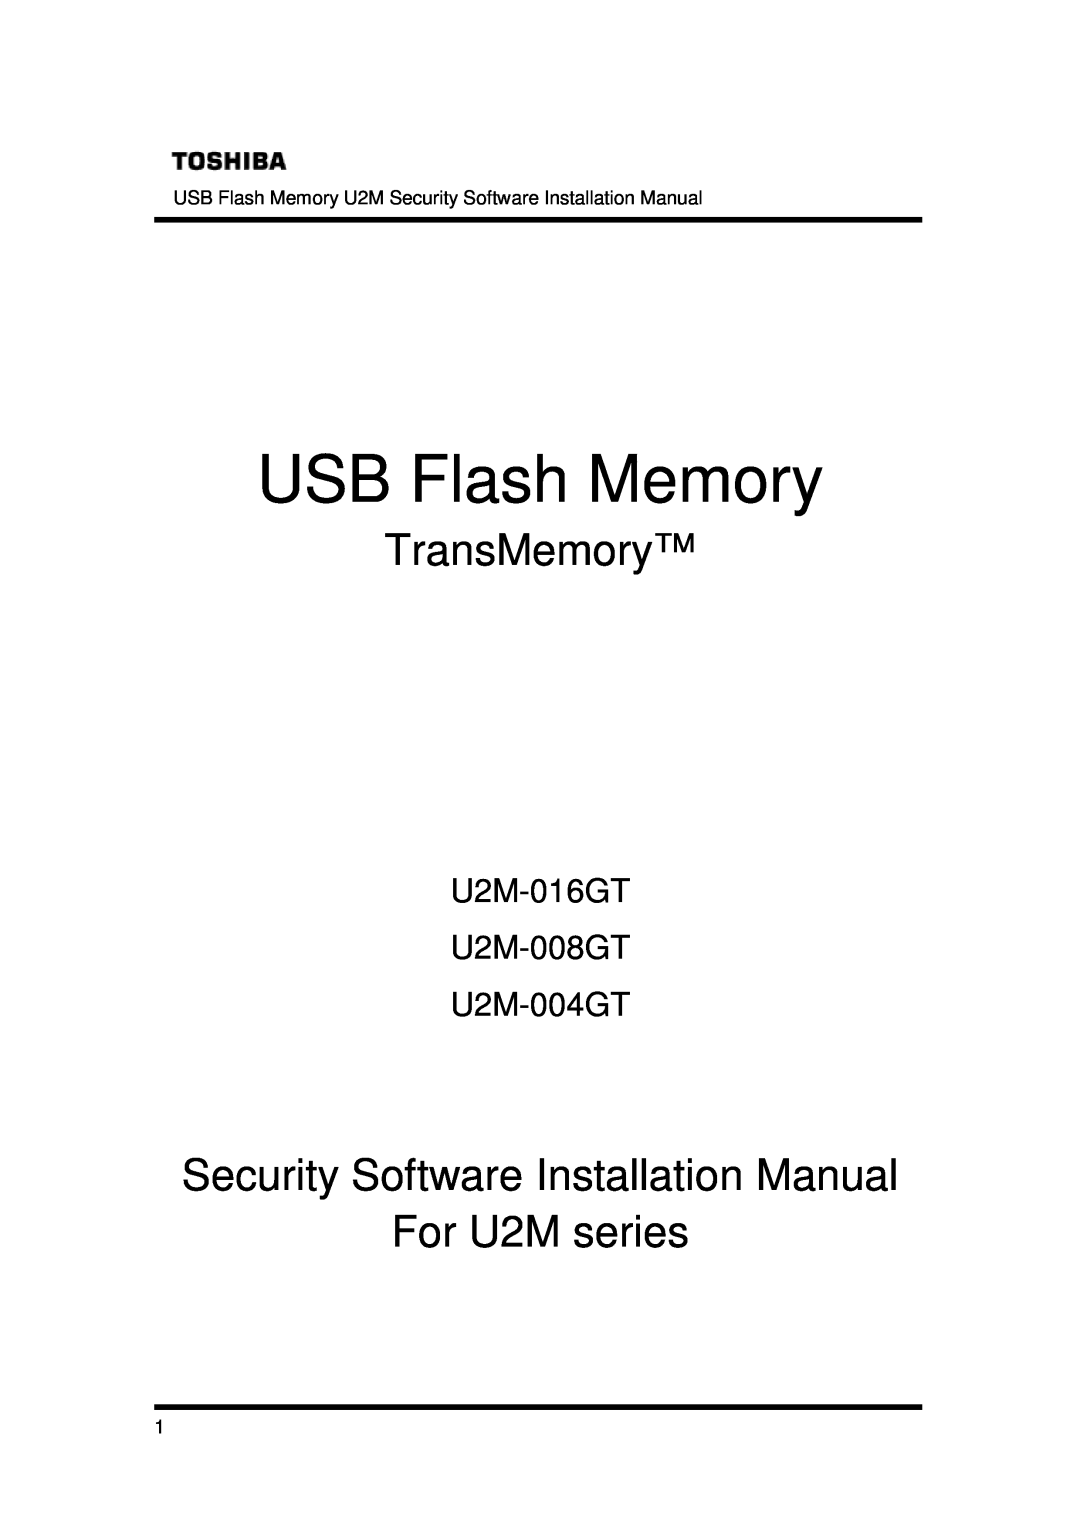 Toshiba U2M-004GT installation manual USB Flash Memory, TransMemory, Security Software Installation Manual For U2M series 